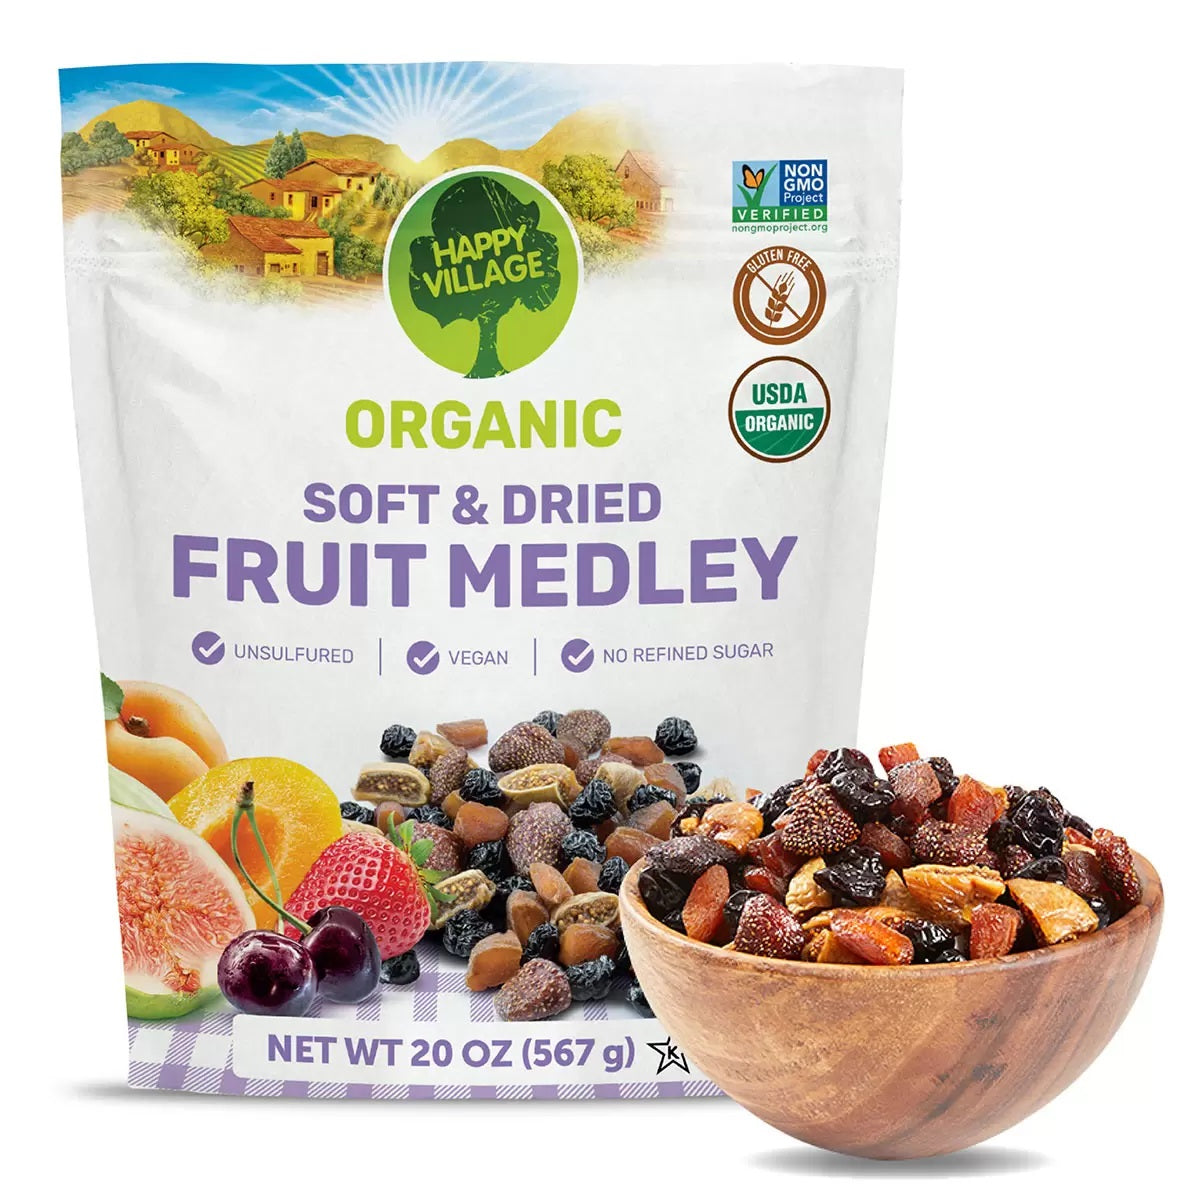 Happy Village Organic Soft & Dried Fruit Medley 567g